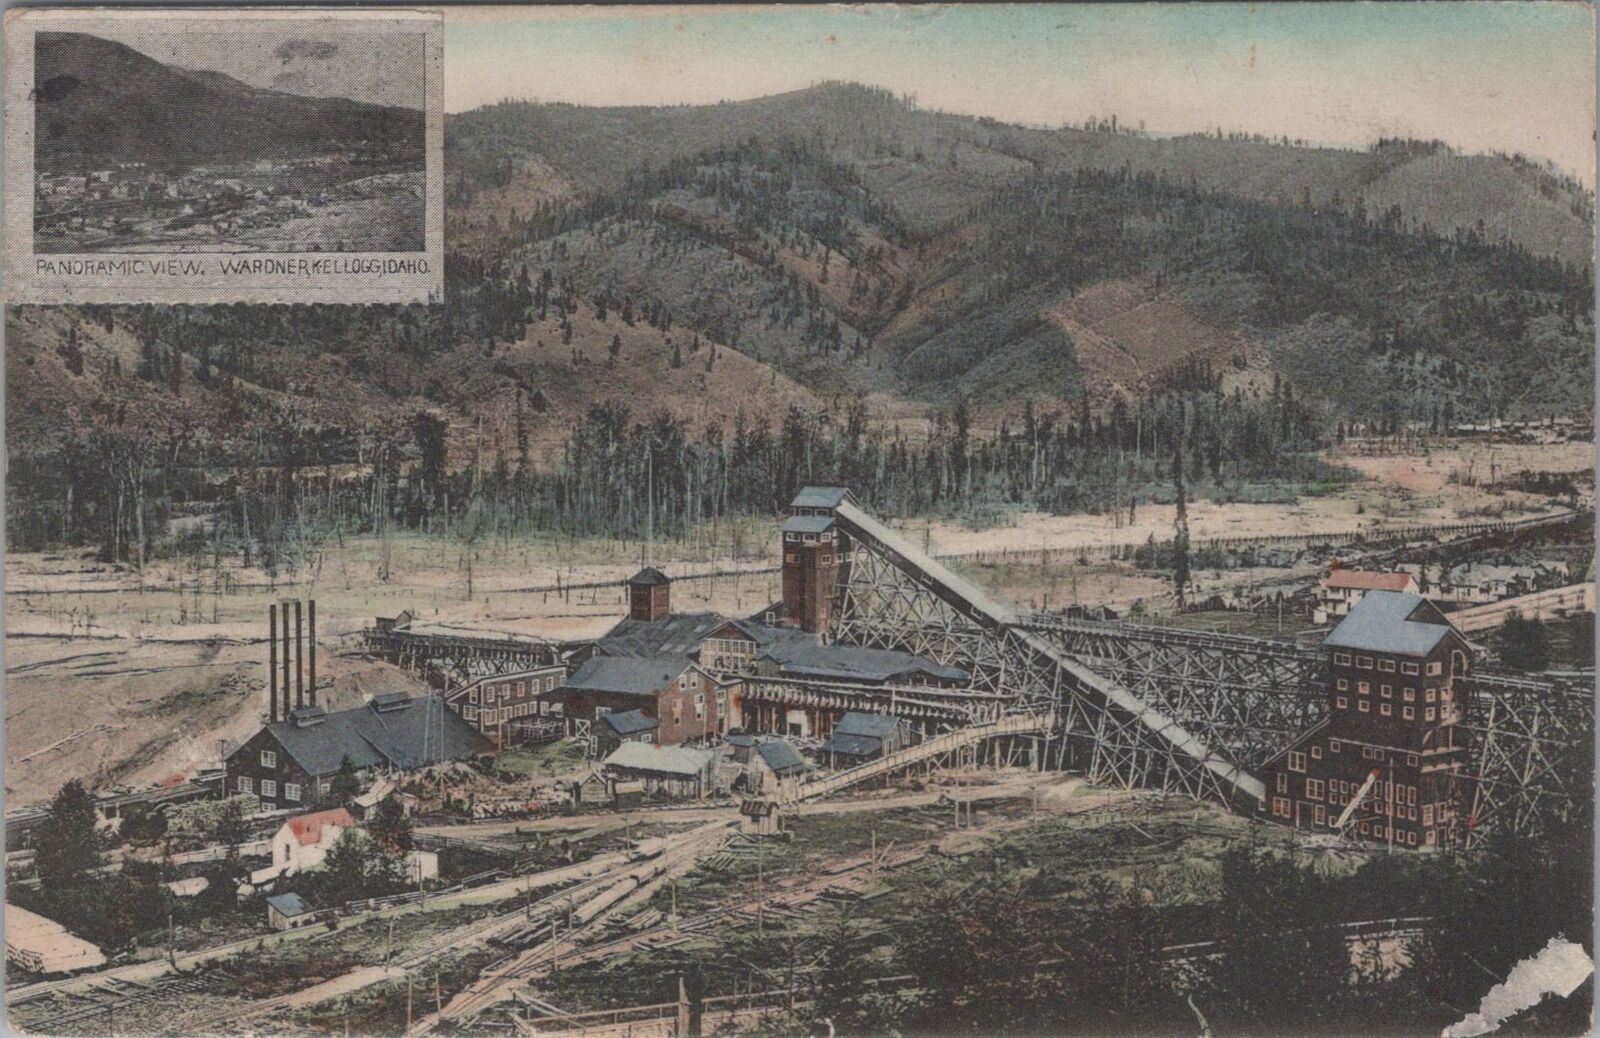 Bunker Hill Mine Sullivan Mill Wardner Kellogg Idaho,Peck PM c1900s Postcard